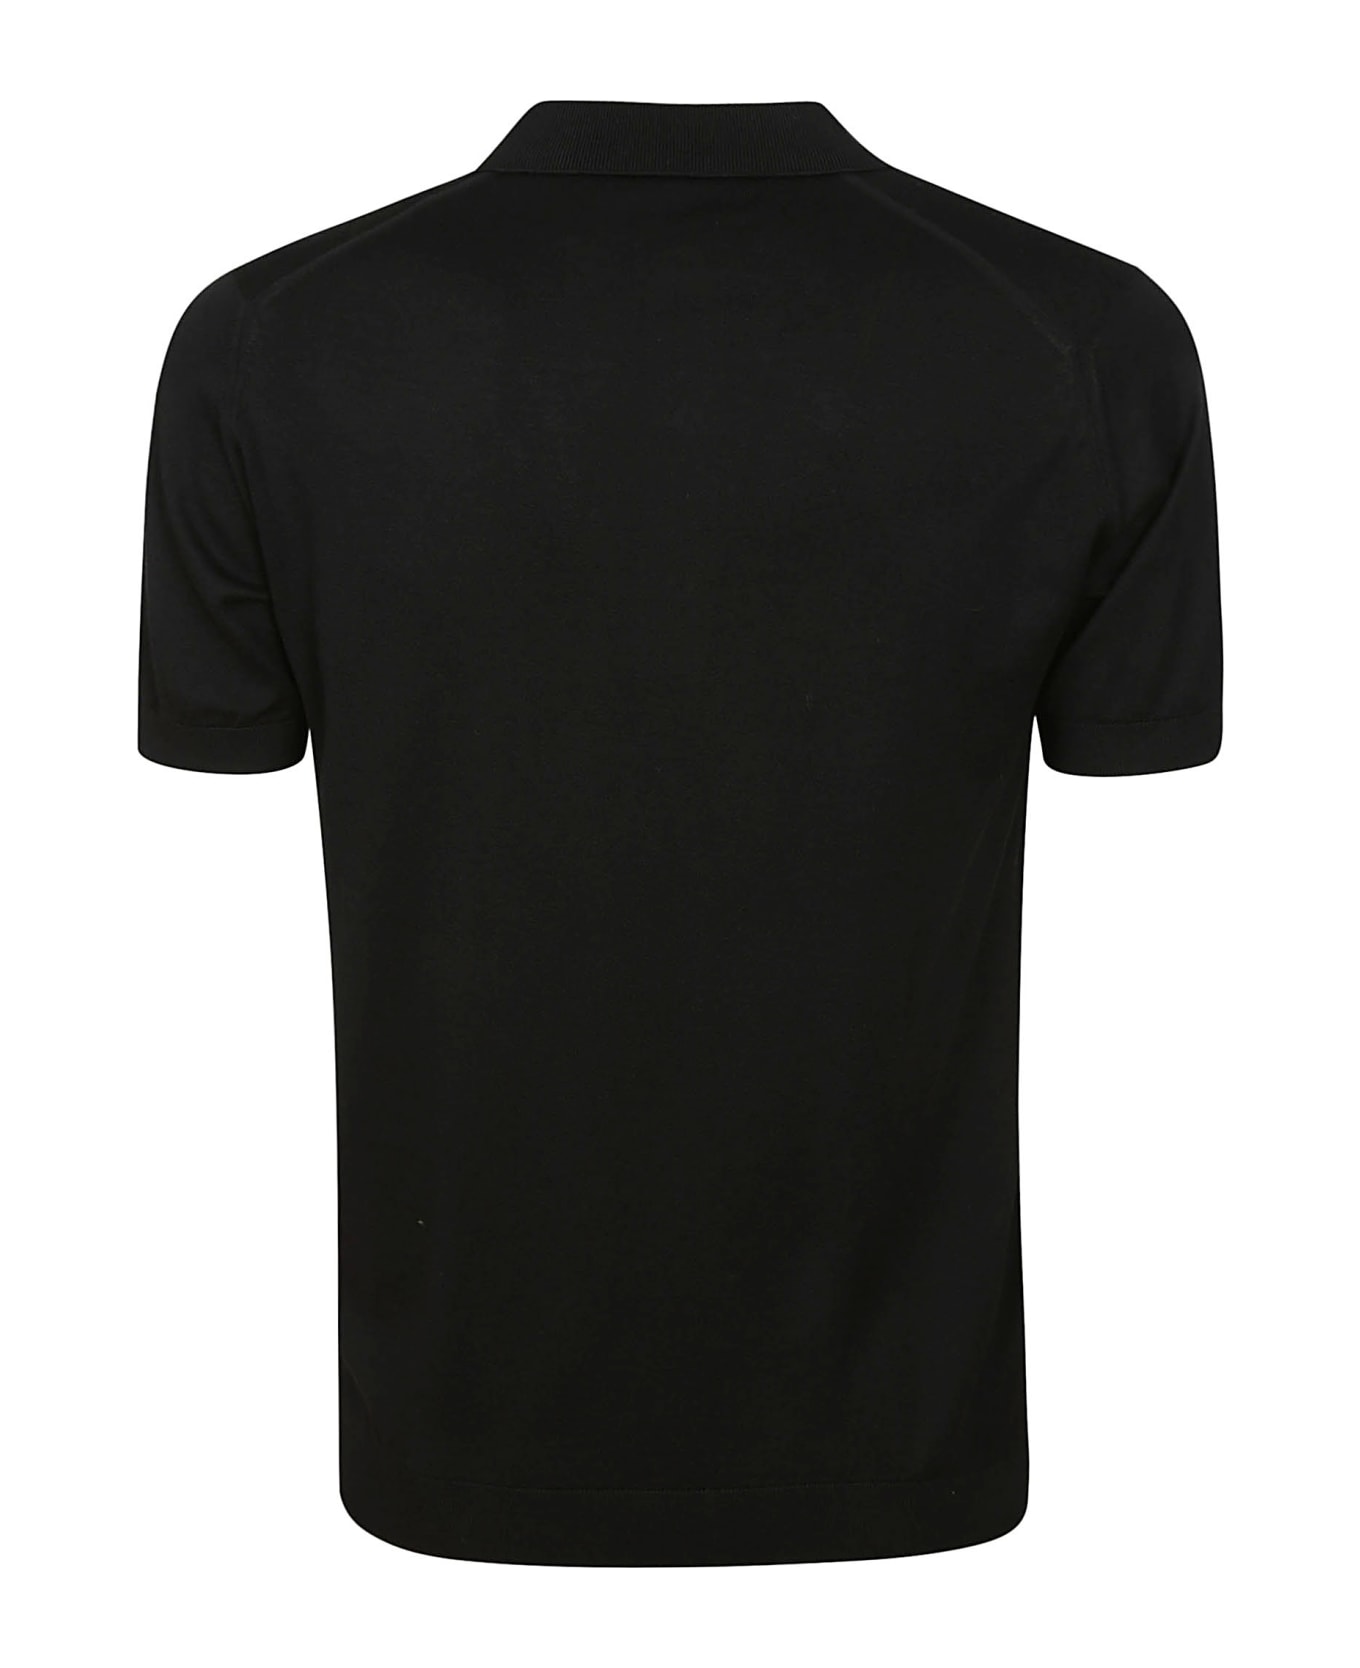 John Smedley Adrian Shirt Ss - Black ポロシャツ